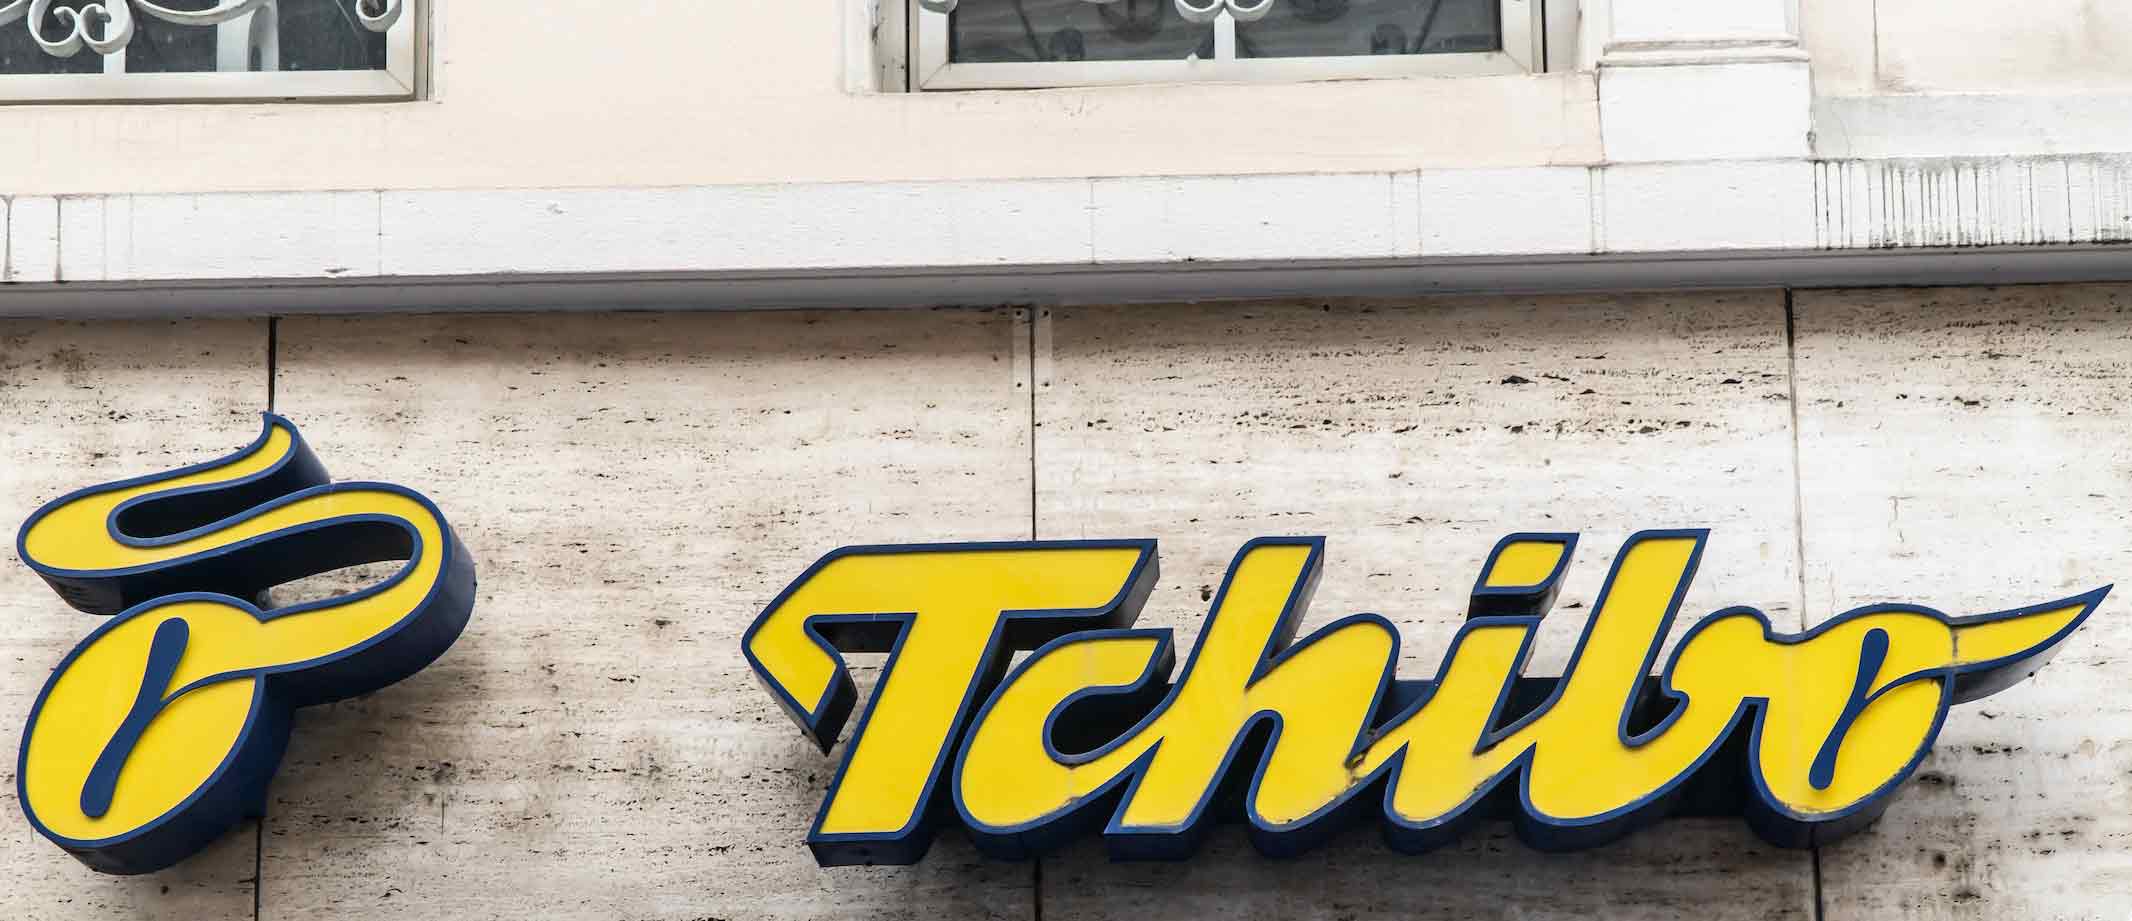 Das Unternehmen Tchibo besitzt 550 eigene Filialen. (Credit: Birgit Reitz-Hofmann / Shutterstock.com)